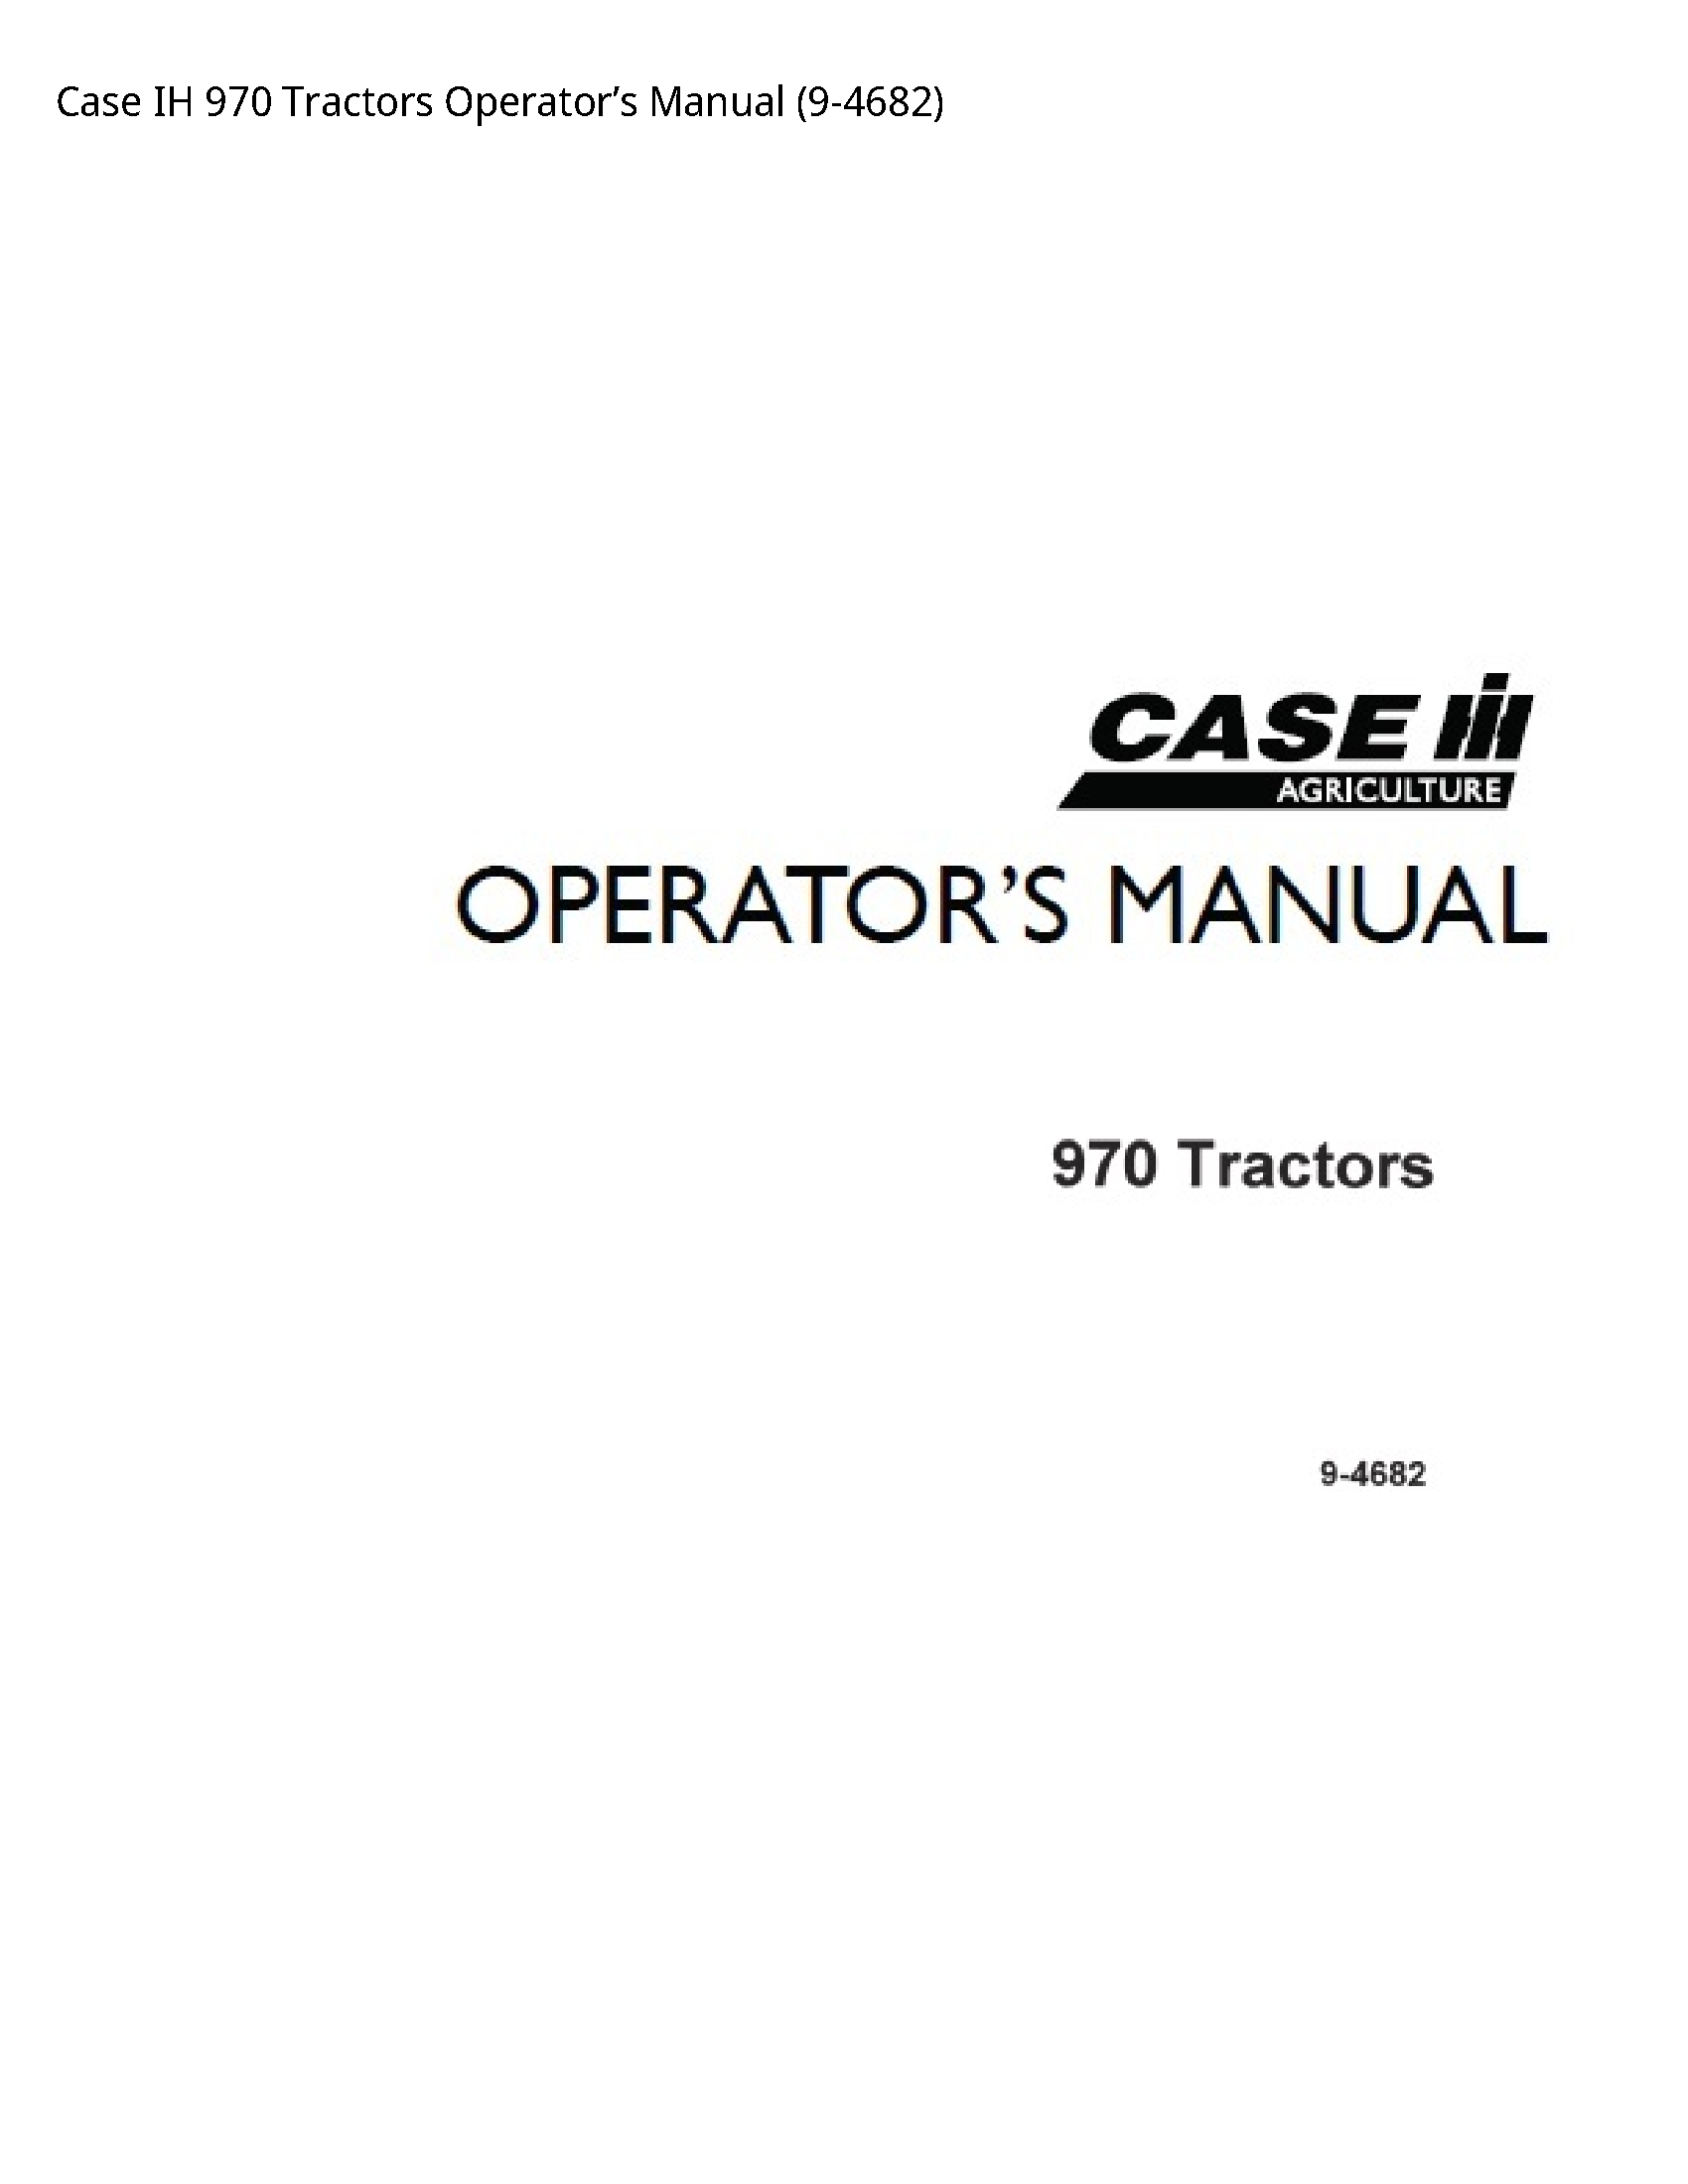 Case/Case IH 970 IH Tractors Operator’s manual